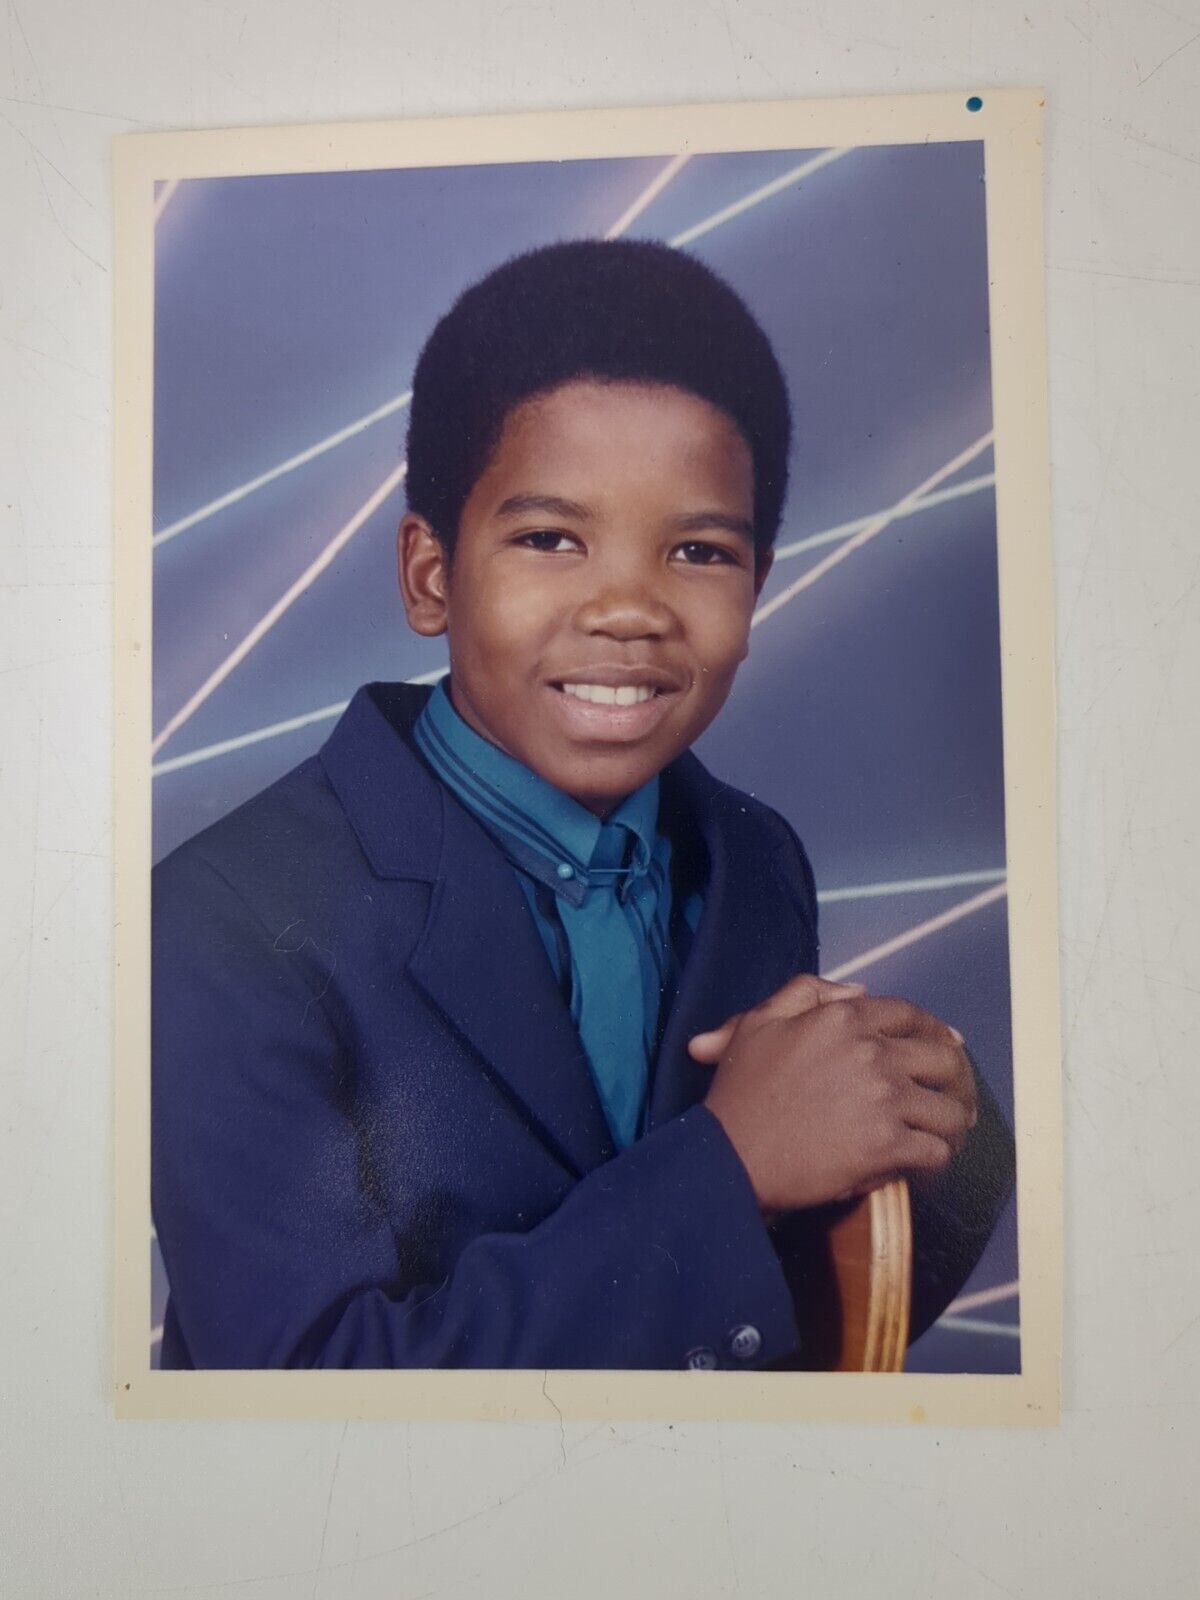 VTG 1980s Small Found Photograph Original Portrait School African American Boy